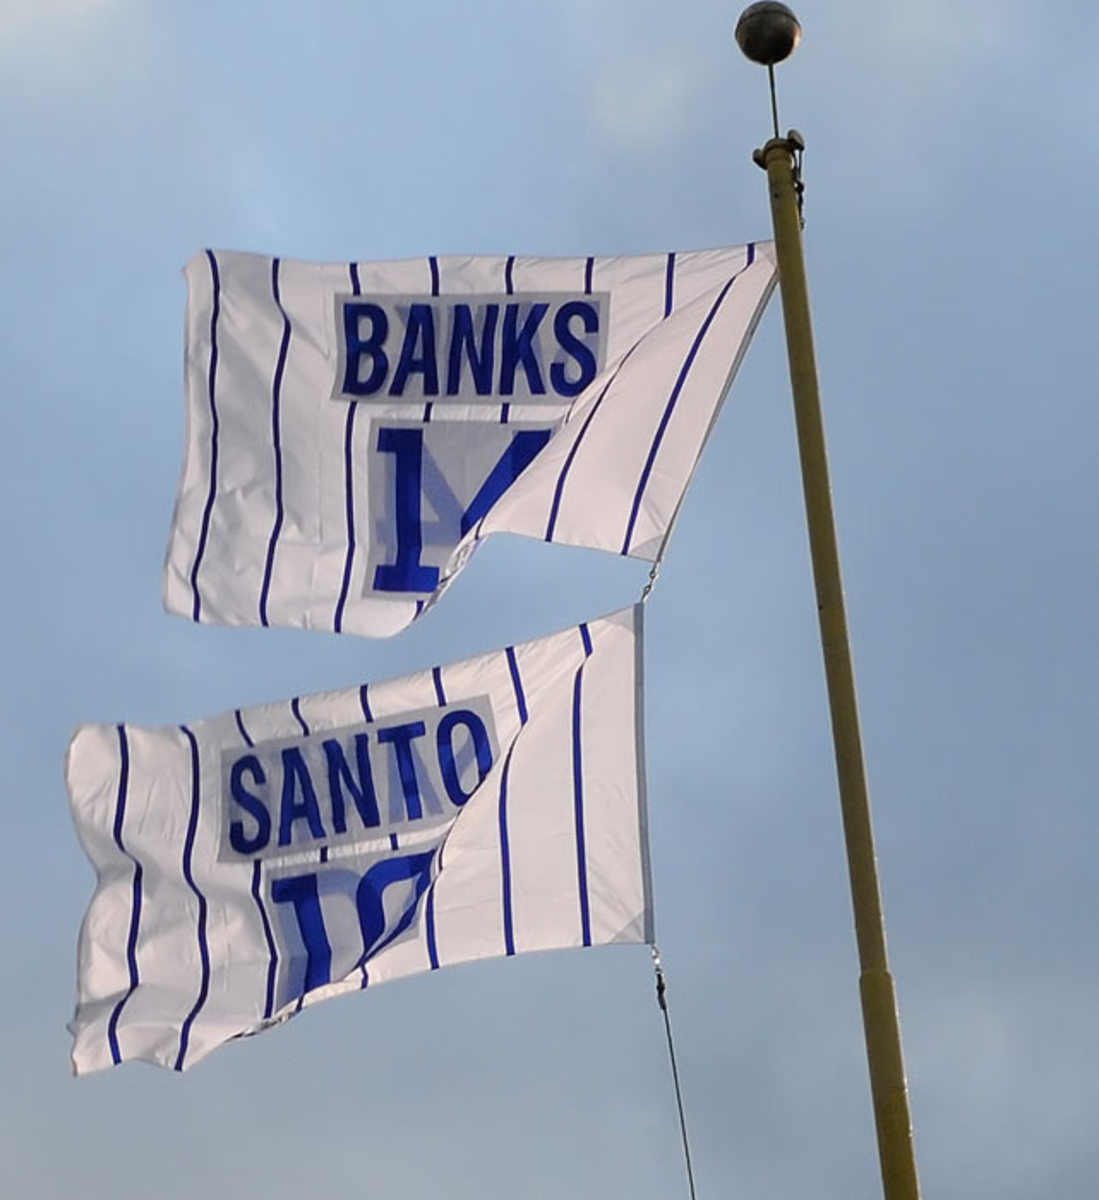 Ernie Banks and Ron Santo flags